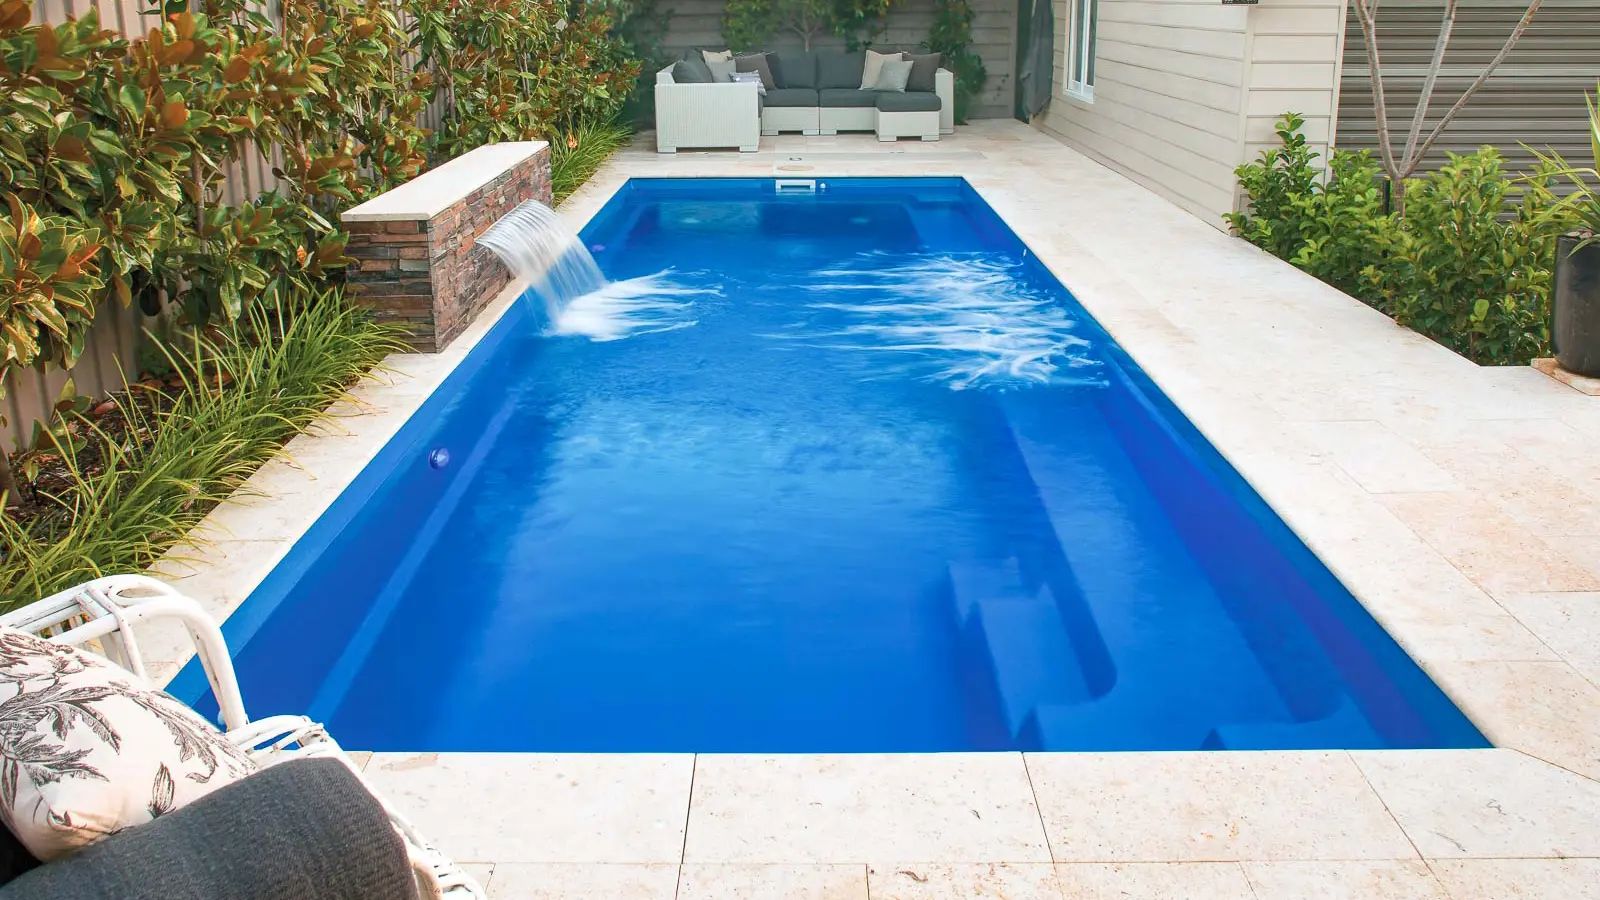 The Harmony, a fiberglass pool with a full channel swim